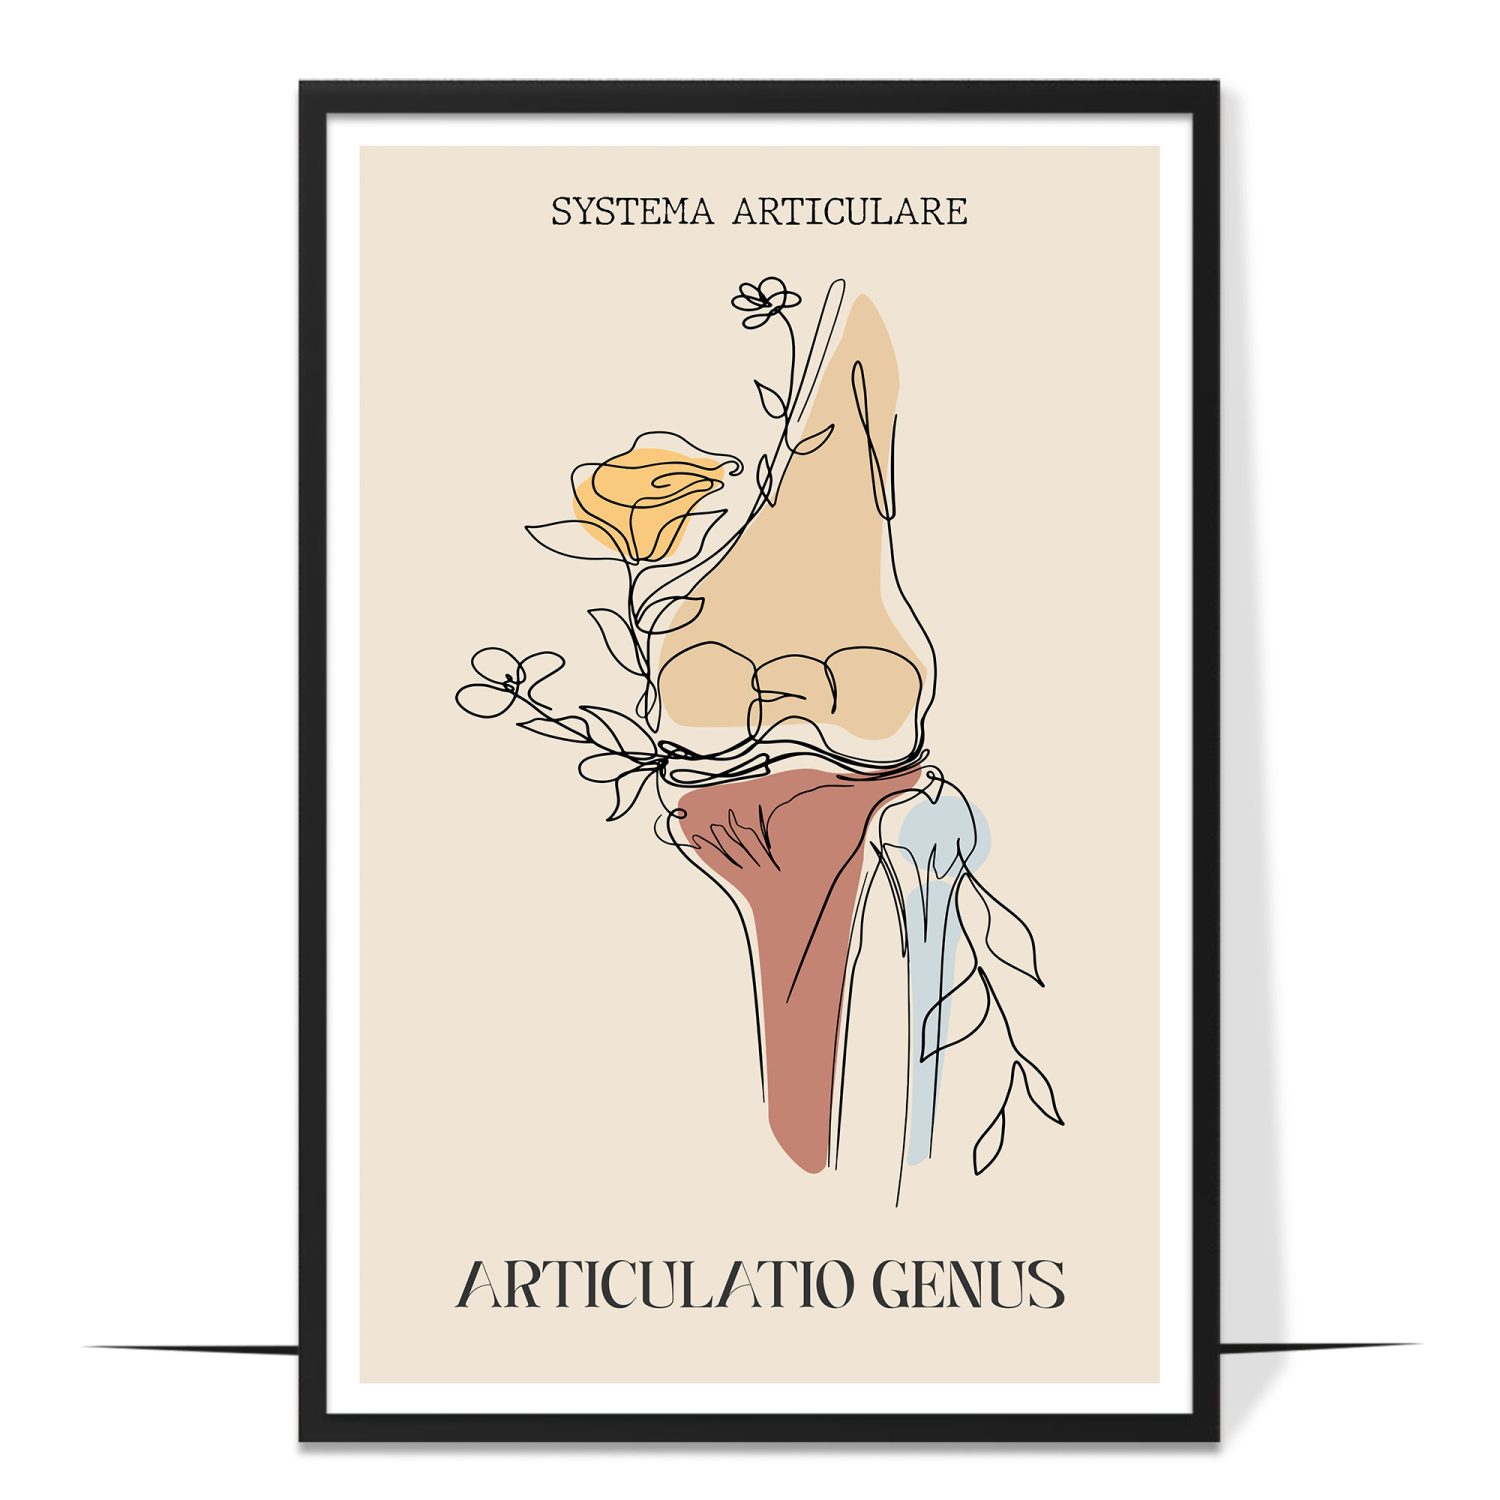 Abstract Articulatio Genus Anatomy Poster